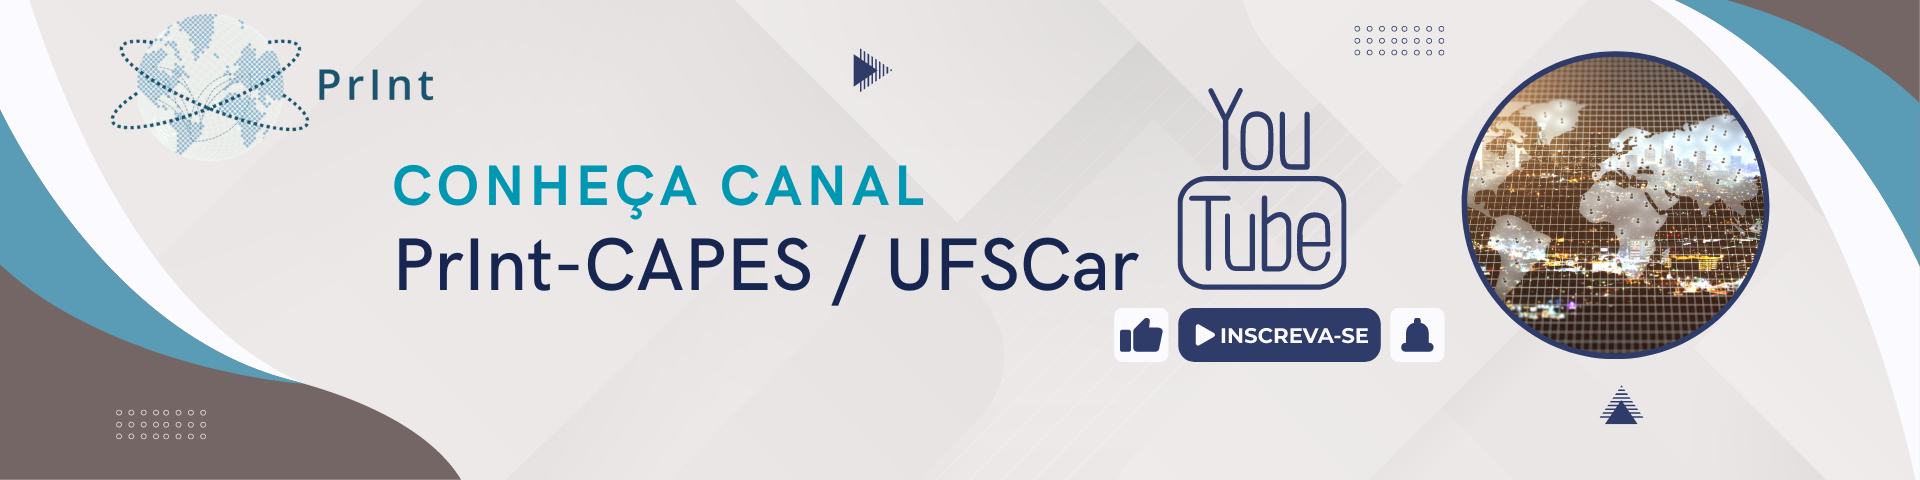 Canal do PrInt - UFSCar no Youtube